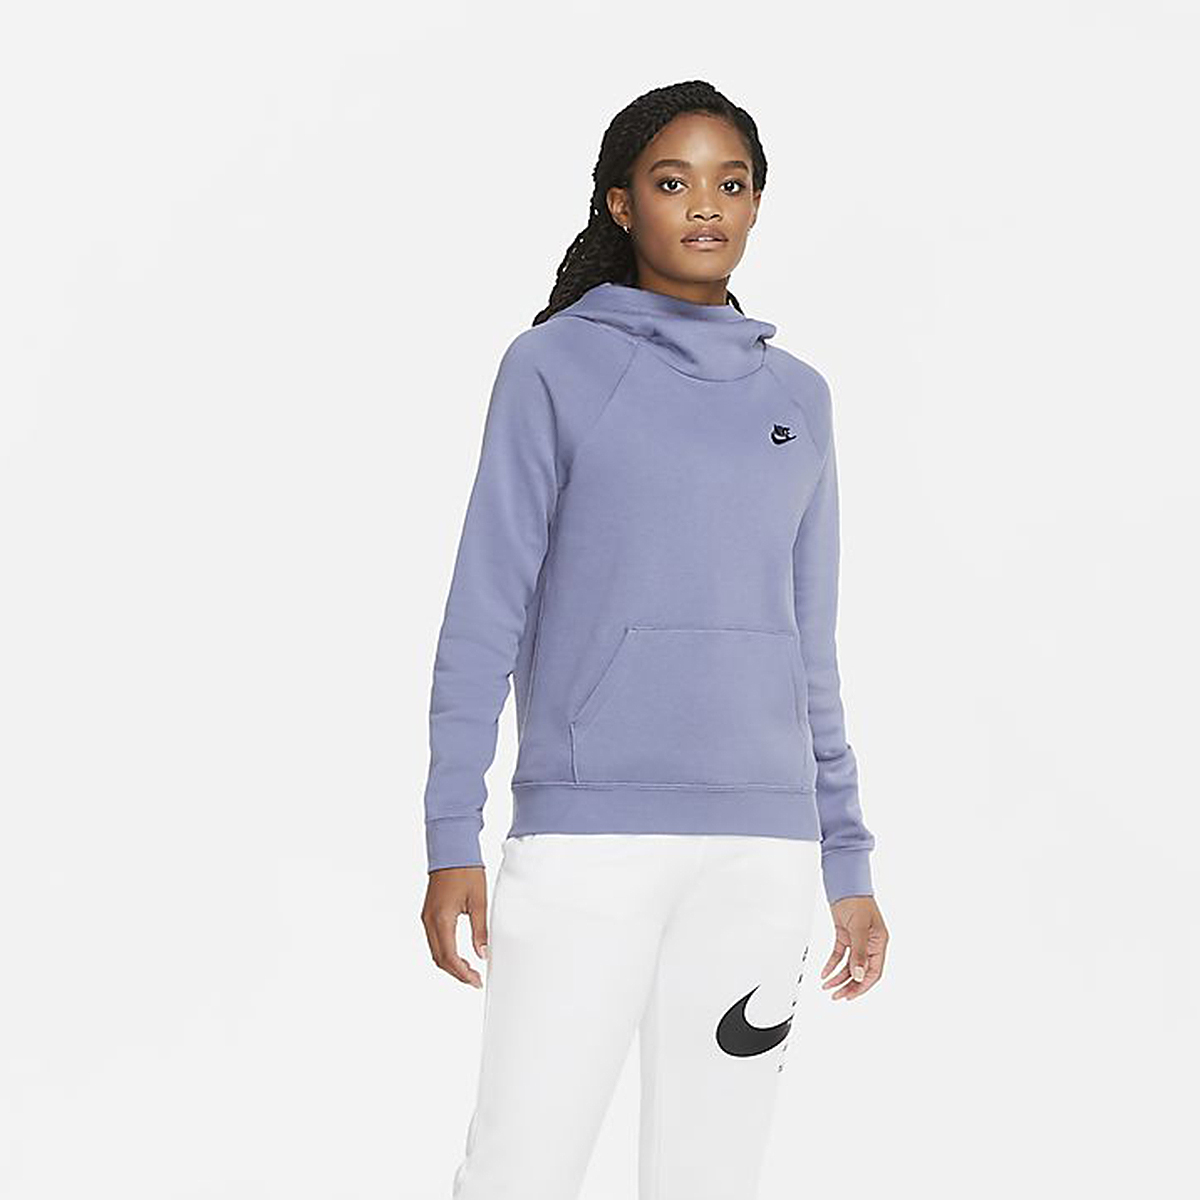 spiegel bovenste touw Nike: 11 Pre-Black Friday Sale Picks Up to 50% Off